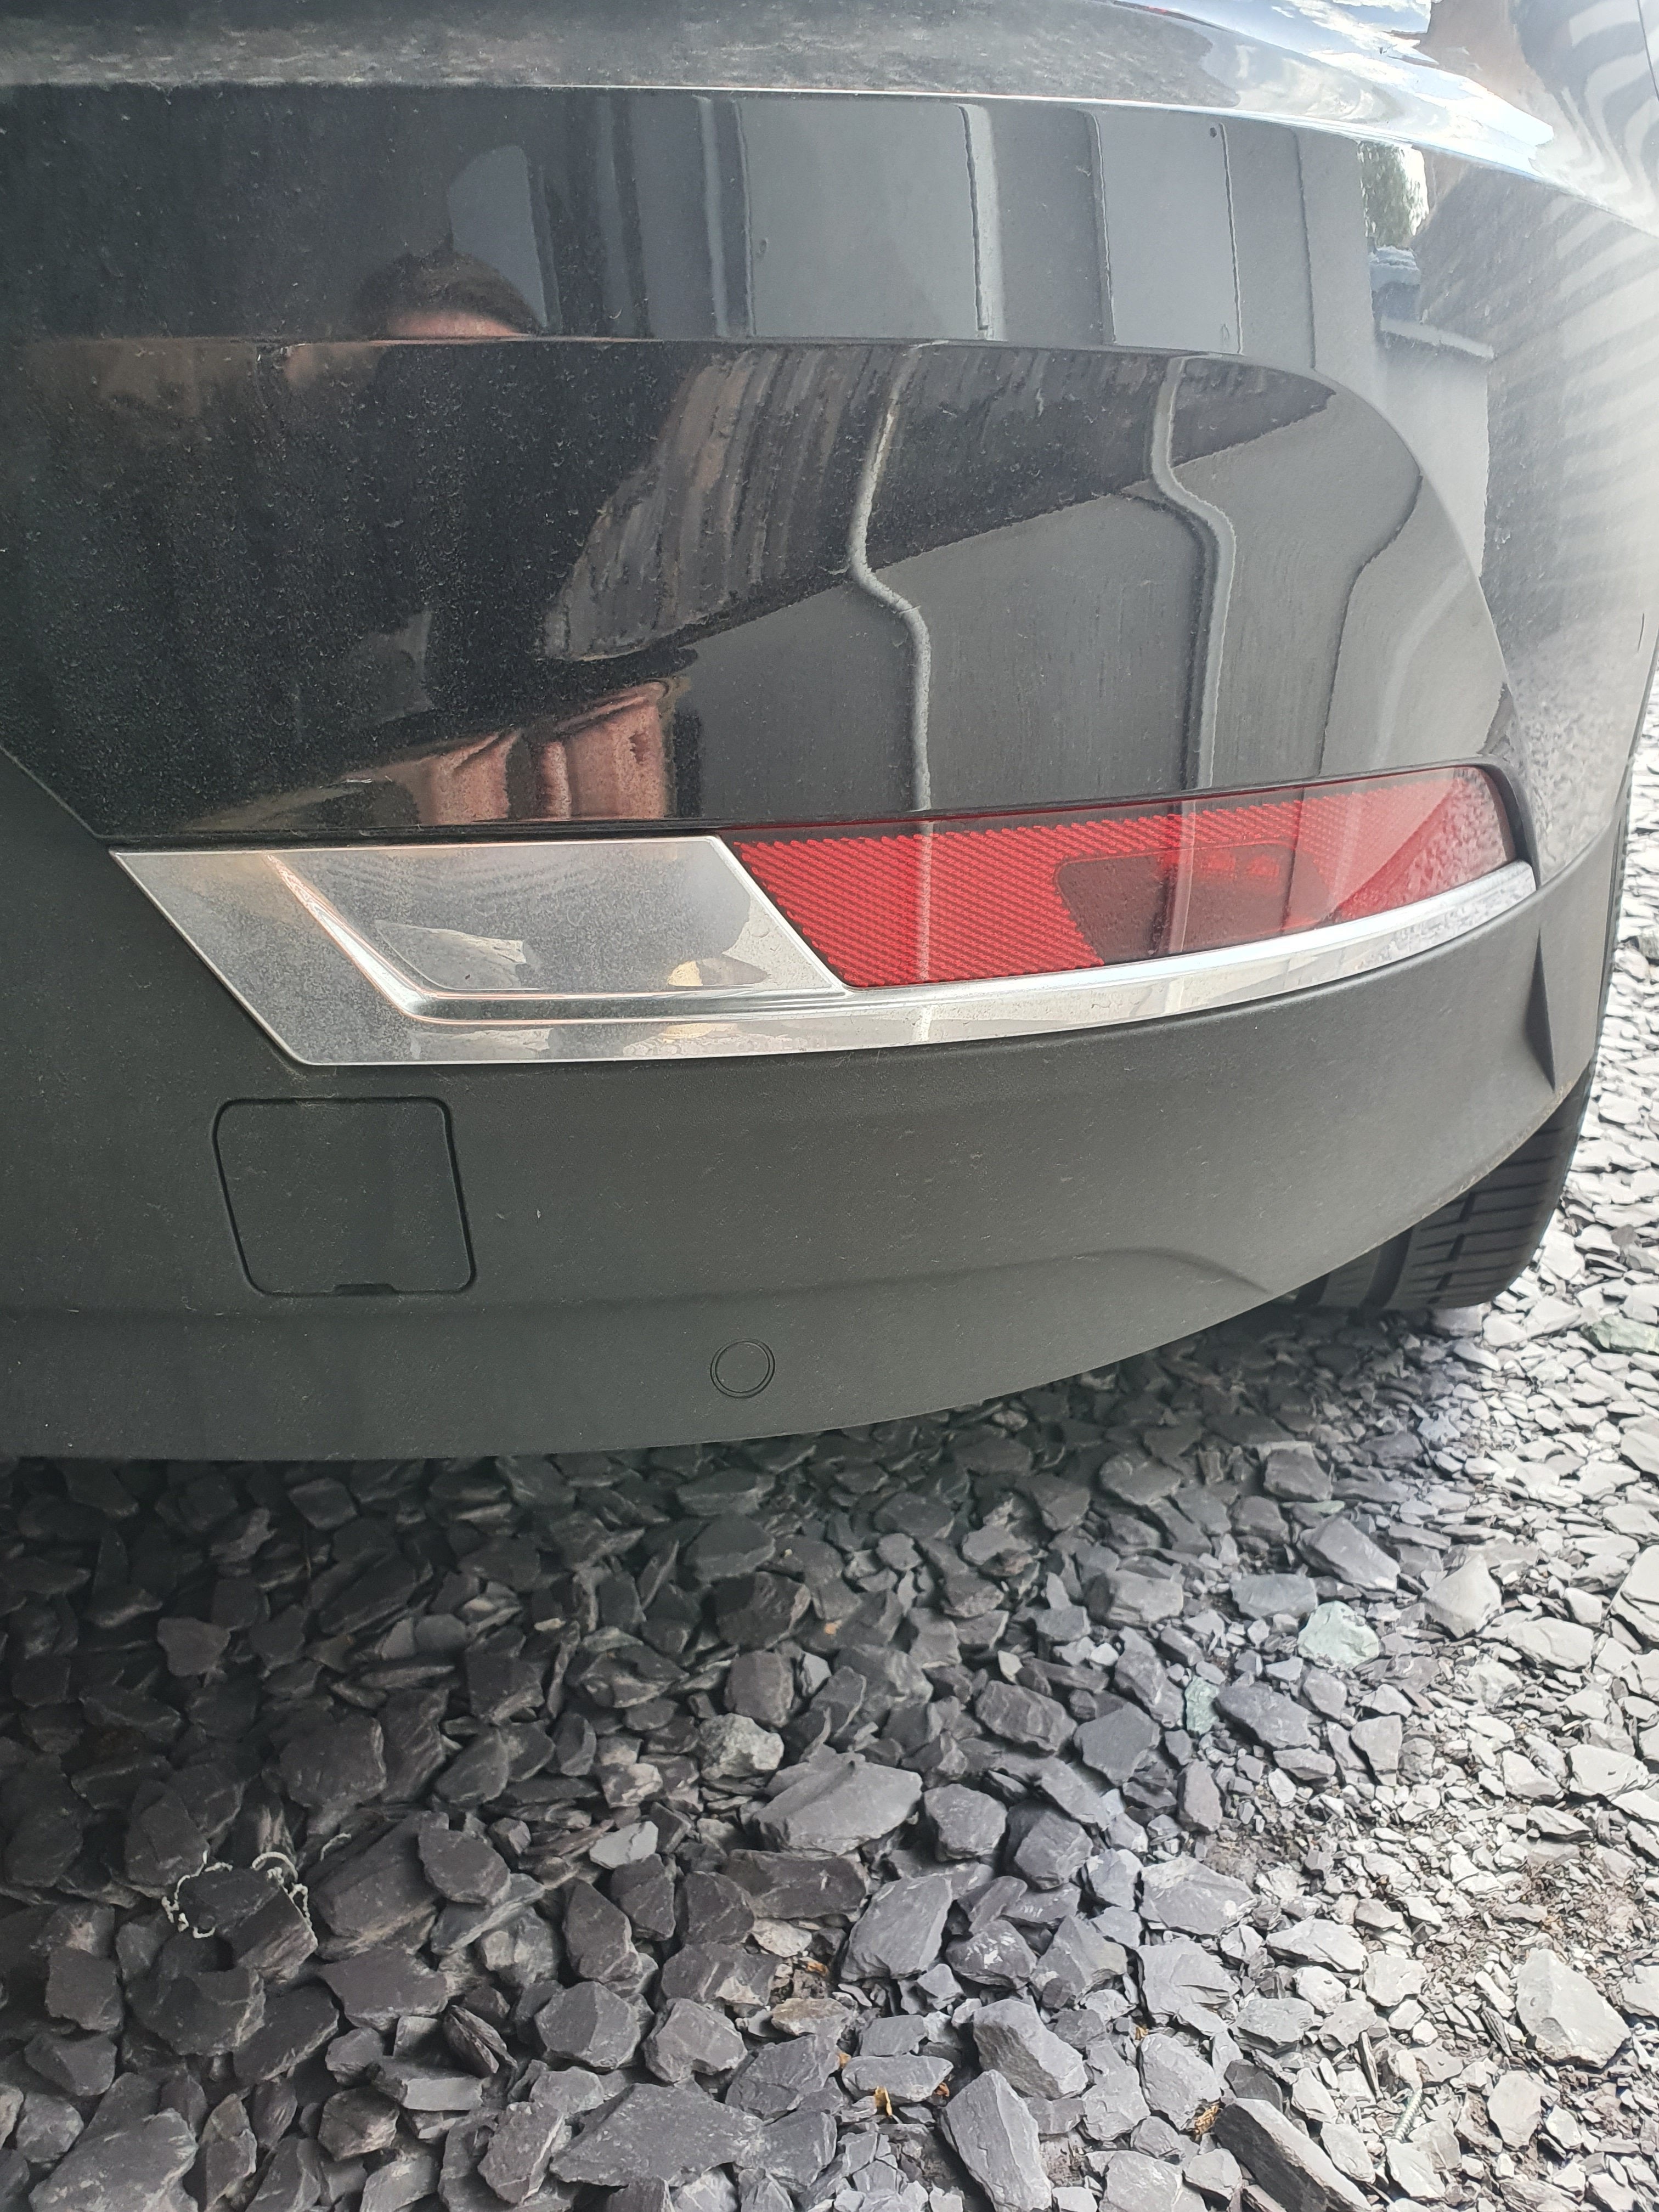 Rear Chrome Bumper Clips - removal